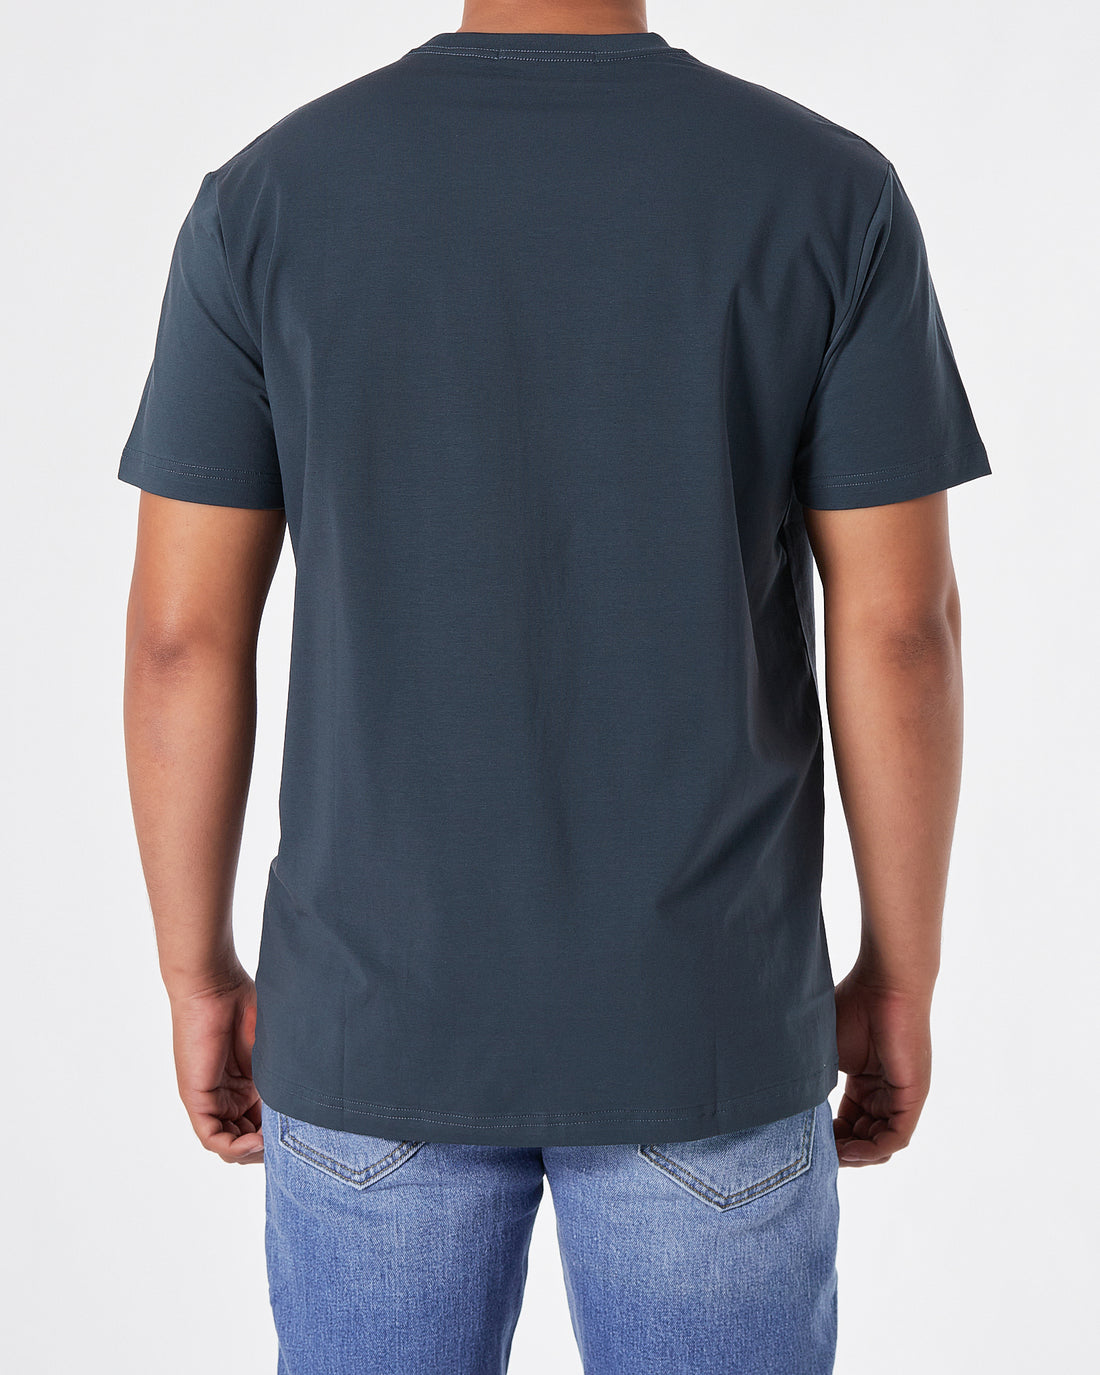 ARM Logo Printed Men Blue T-Shirt 17.90